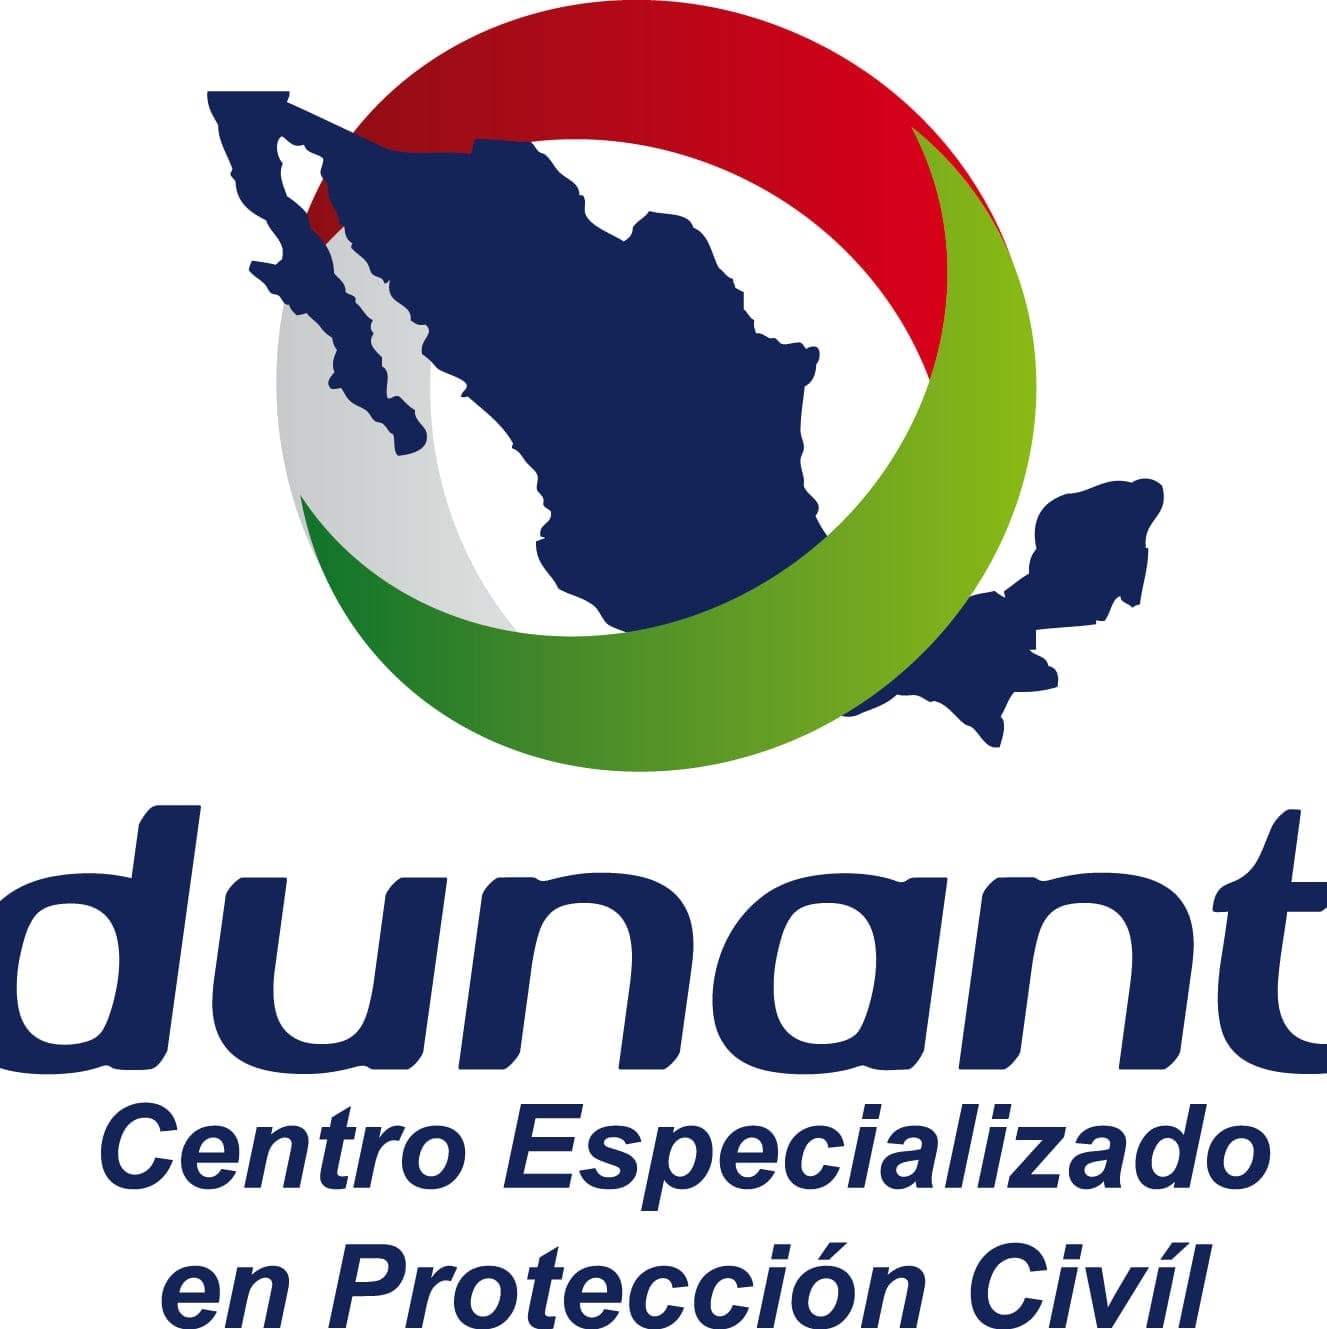 Centro Especializado en Protección Civil Dunant